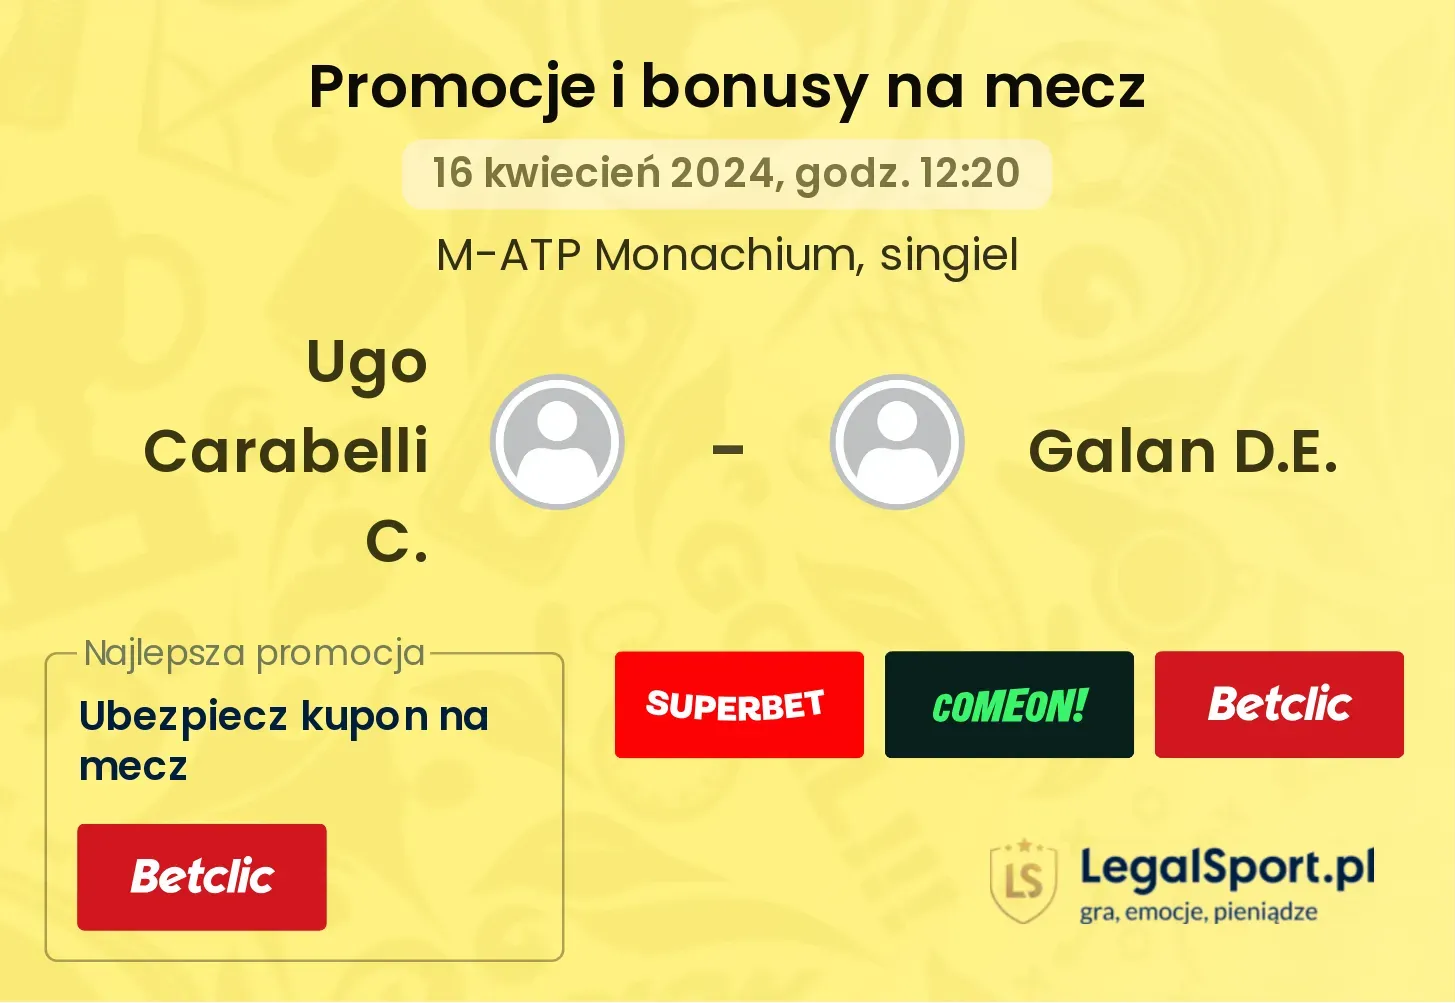 Ugo Carabelli C. - Galan D.E. promocje bonusy na mecz